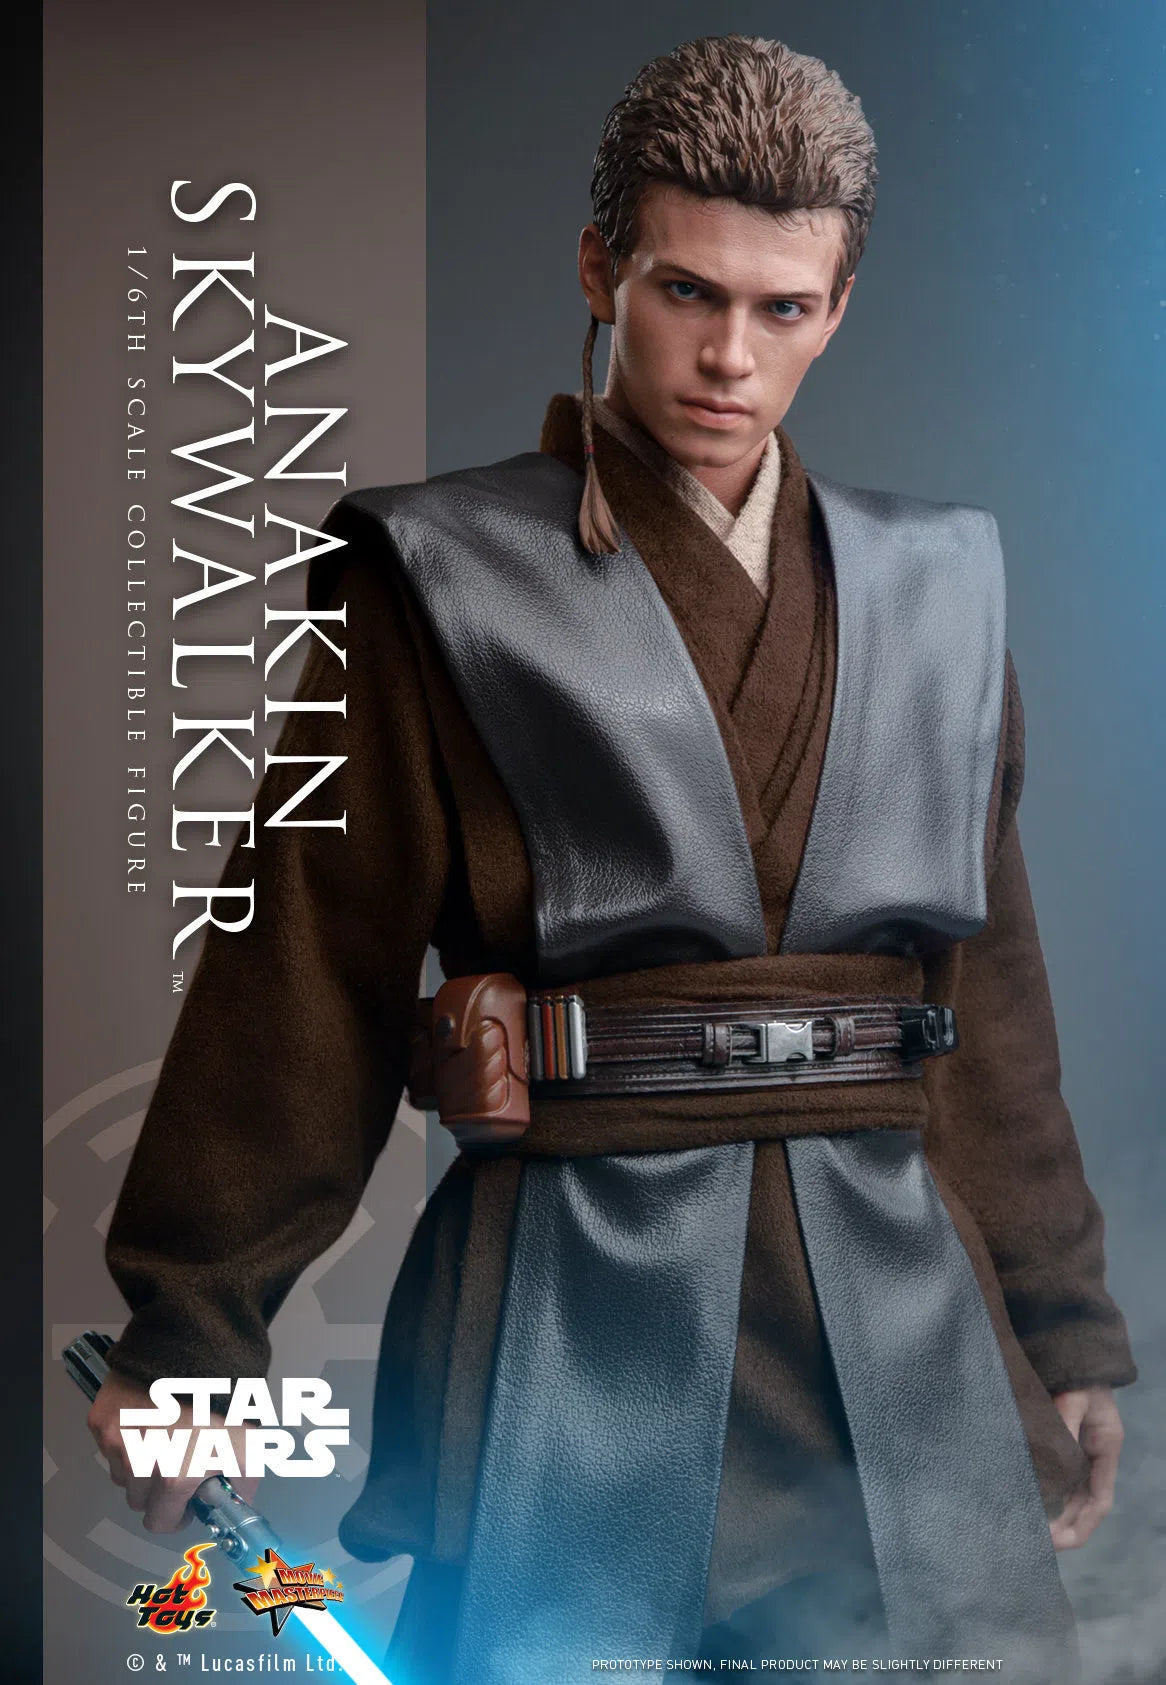 Anakin Skywalker: Star Wars Episode II: Attack Of The Clones: Hot Toys